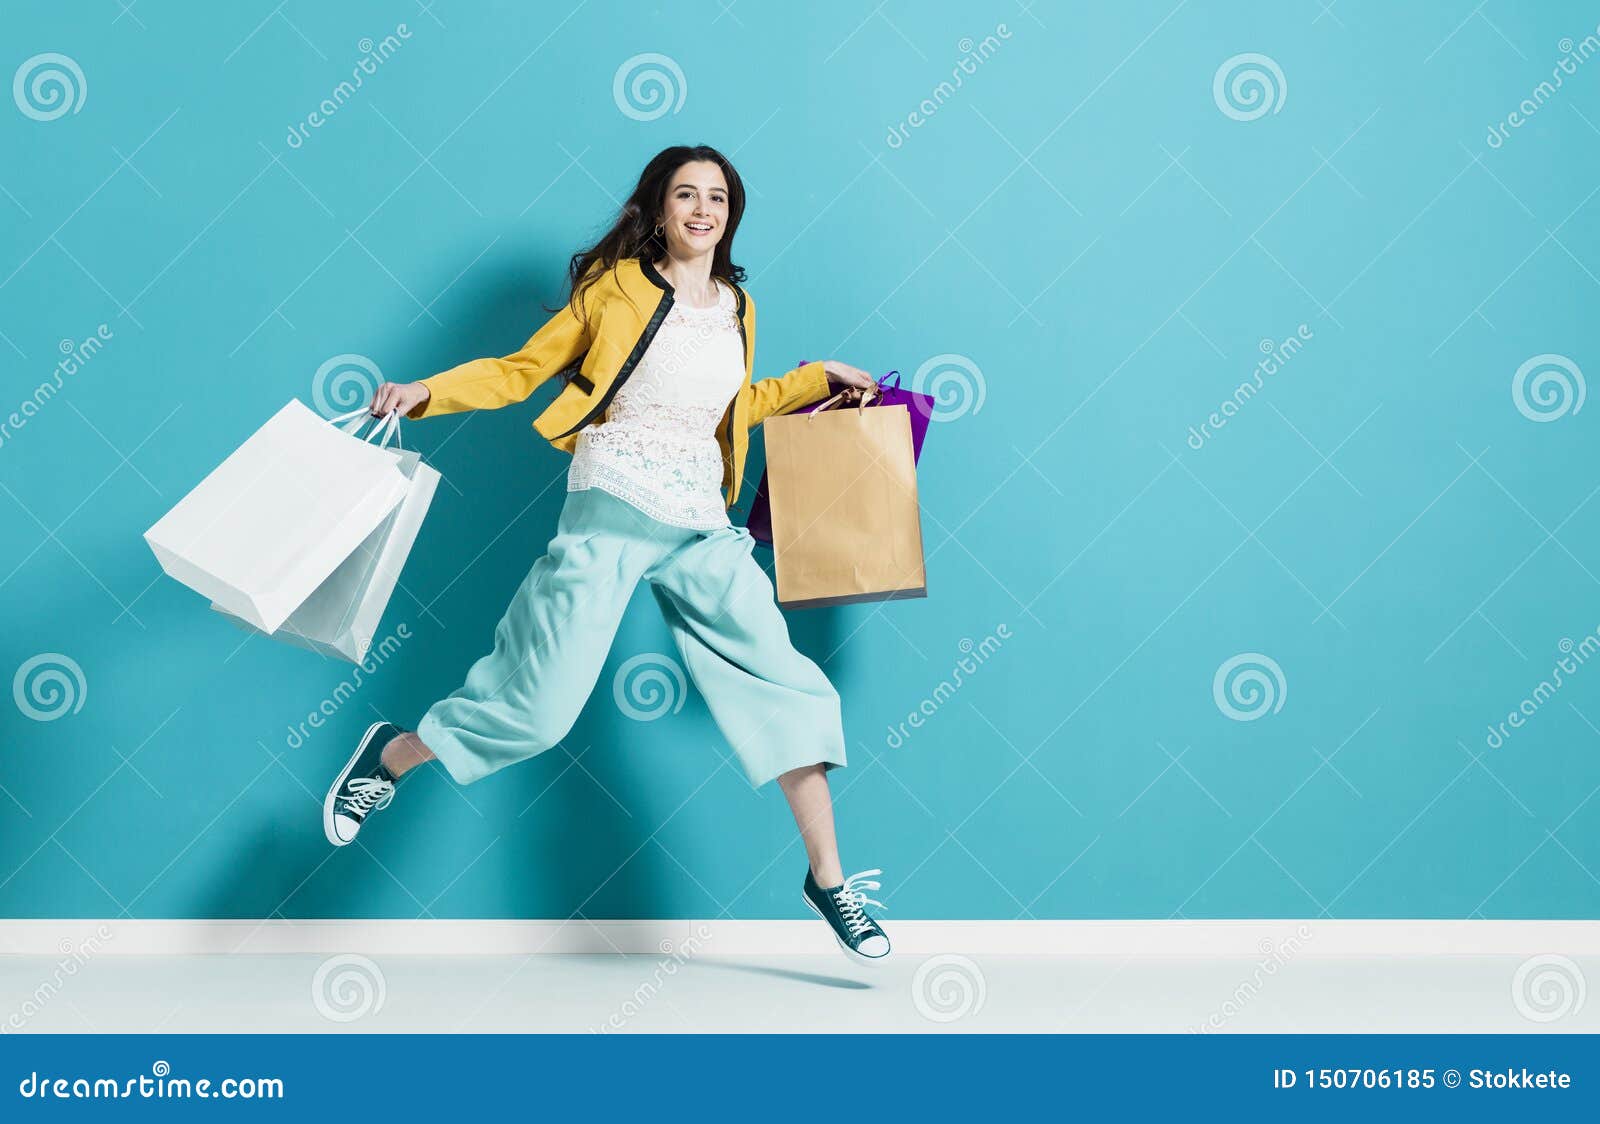 Cheerful Happy Woman Enjoying Shopping Stock Image - Image of ...